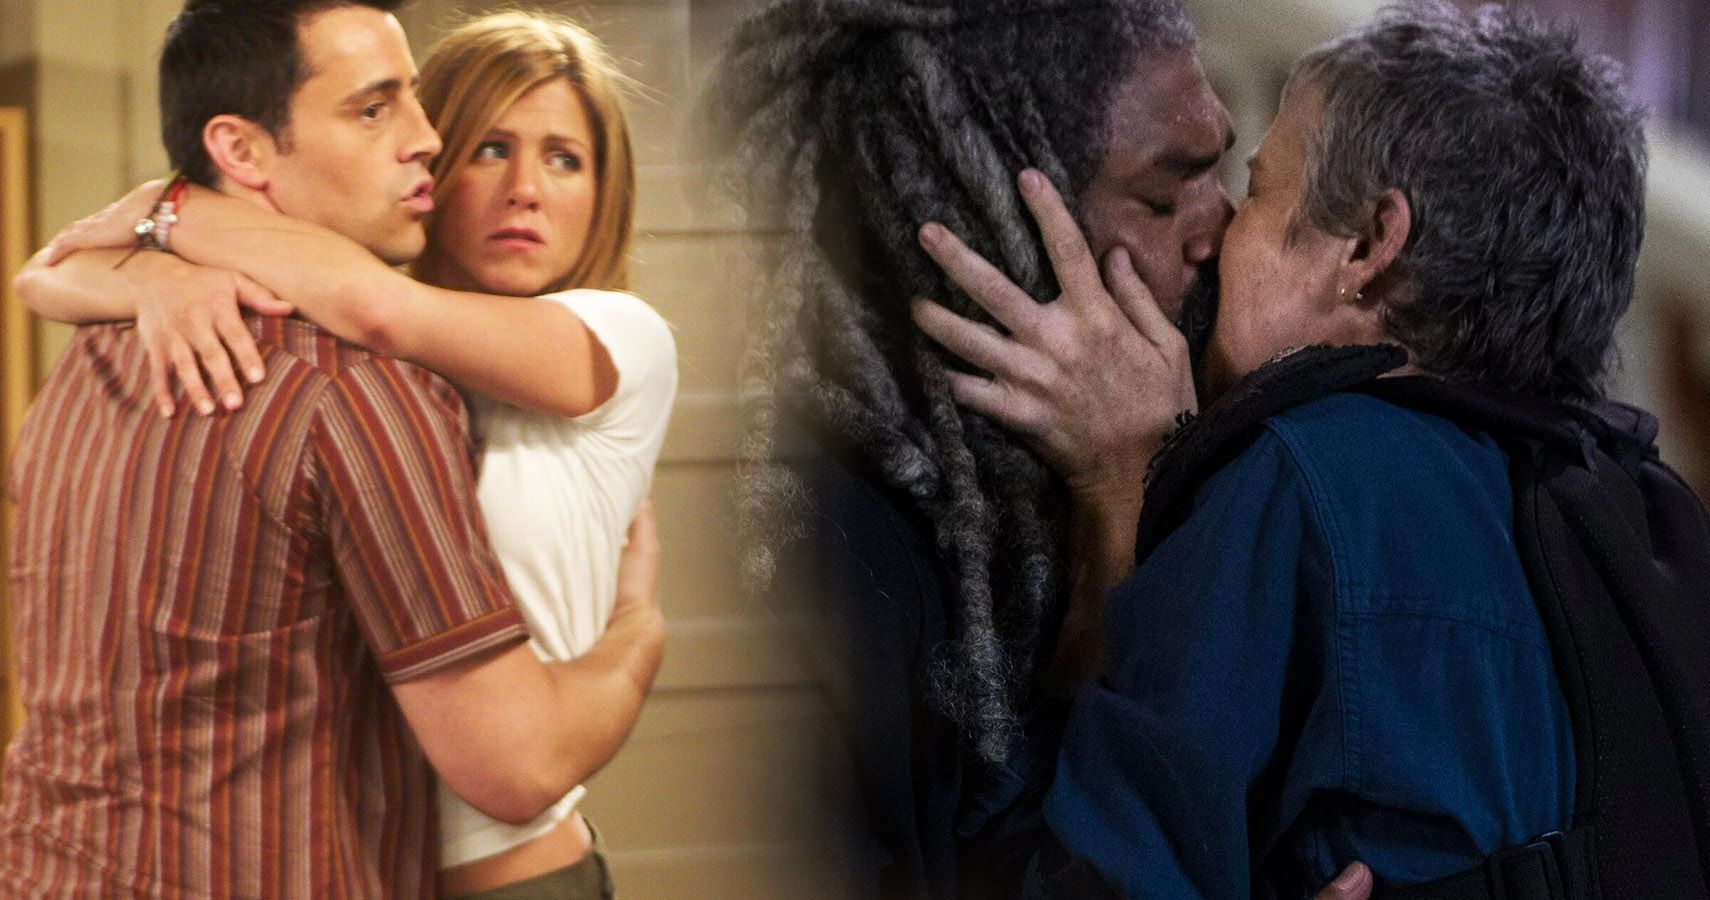 10 Of The Most Cringeworthy Romances On TV